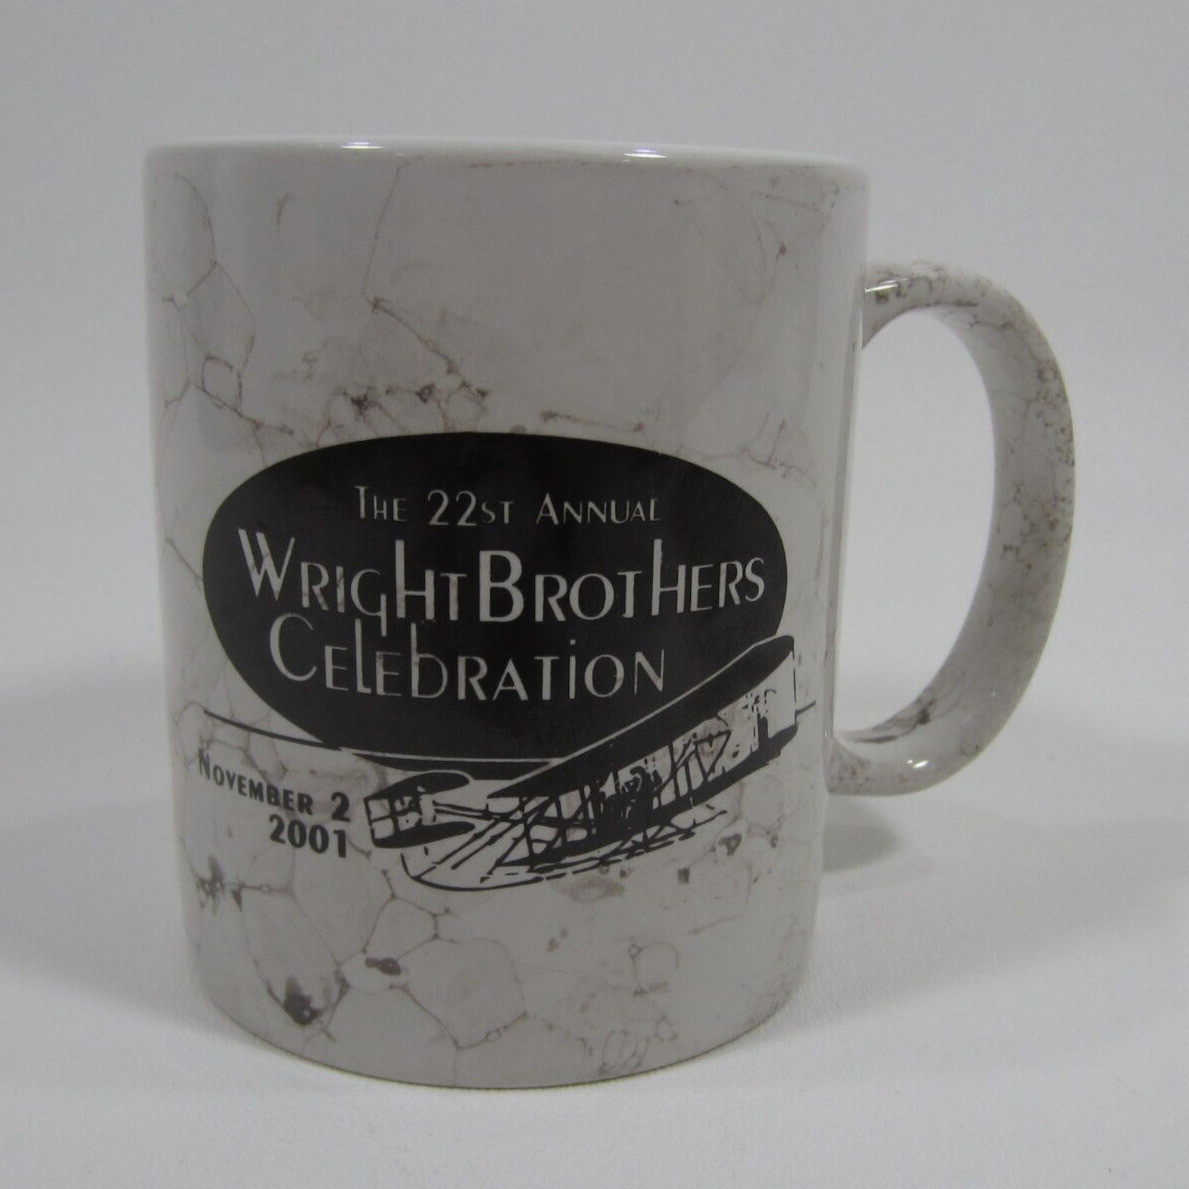 Wright Brothers 22st Nov 2nd, 2001 Annual Mug / Cup - Kansas Aviation Museum